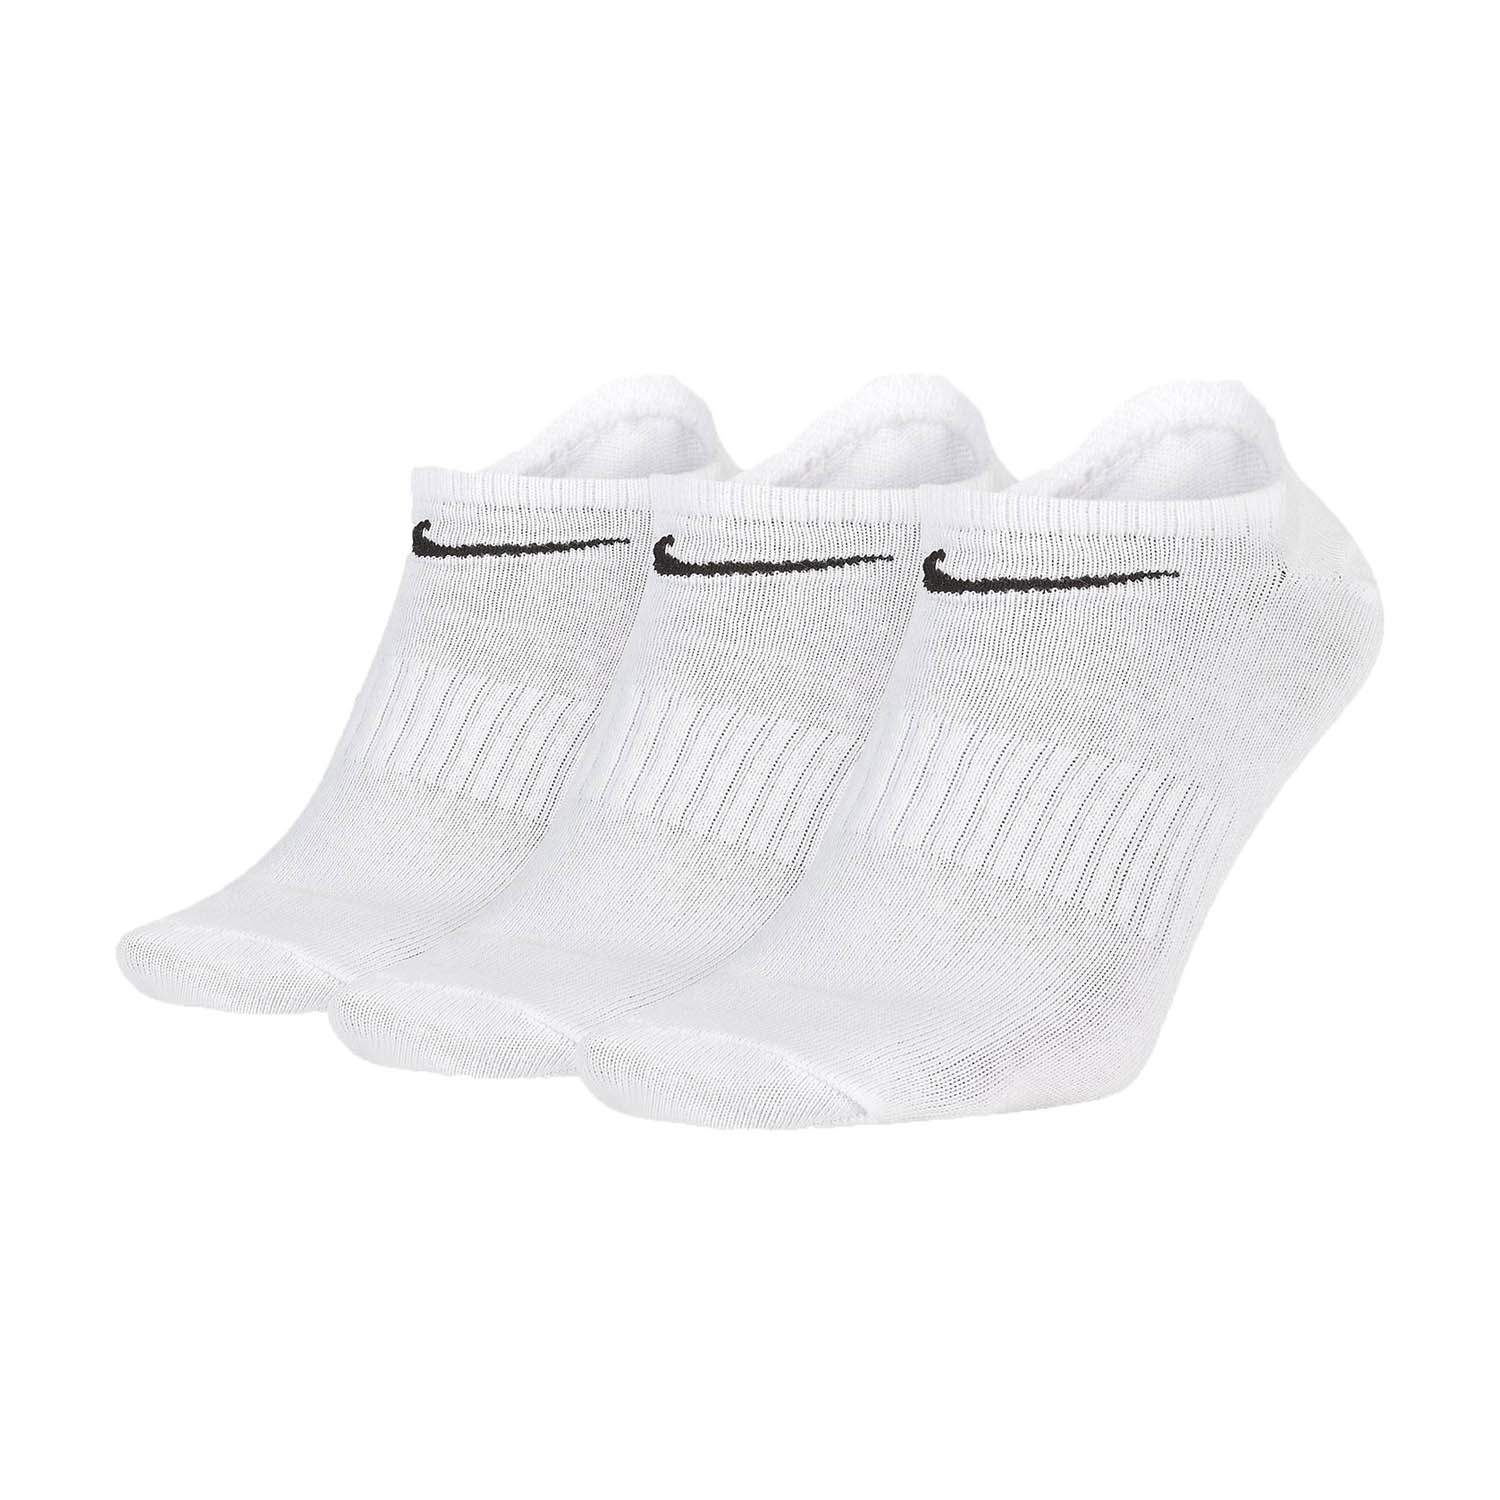 Nike Everyday Lightweight x 3 Calze - White/Black